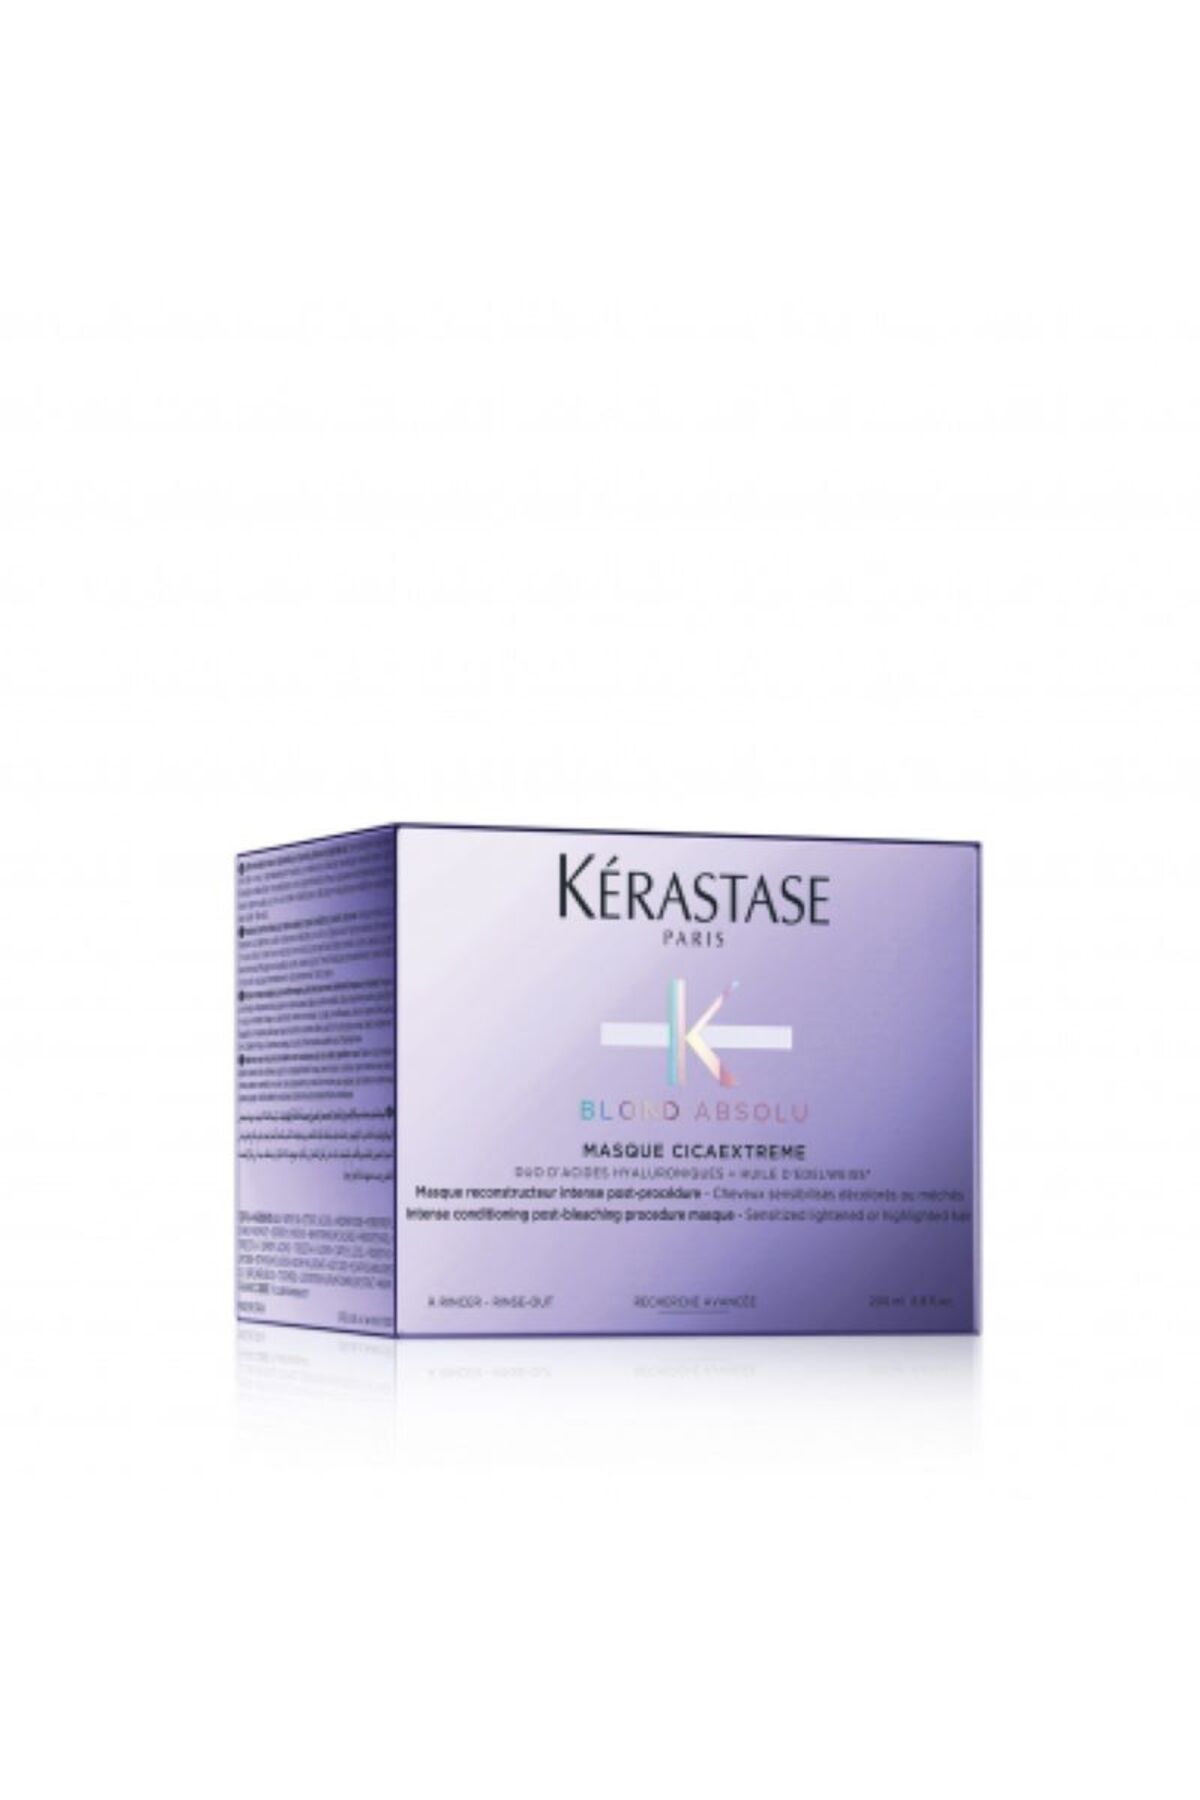 KÉRASTASE Kérastase Blond Absolu Masque Ultra Violet Yellow Reflection Neutralizing Hair Mask 6.8 fl.oz.